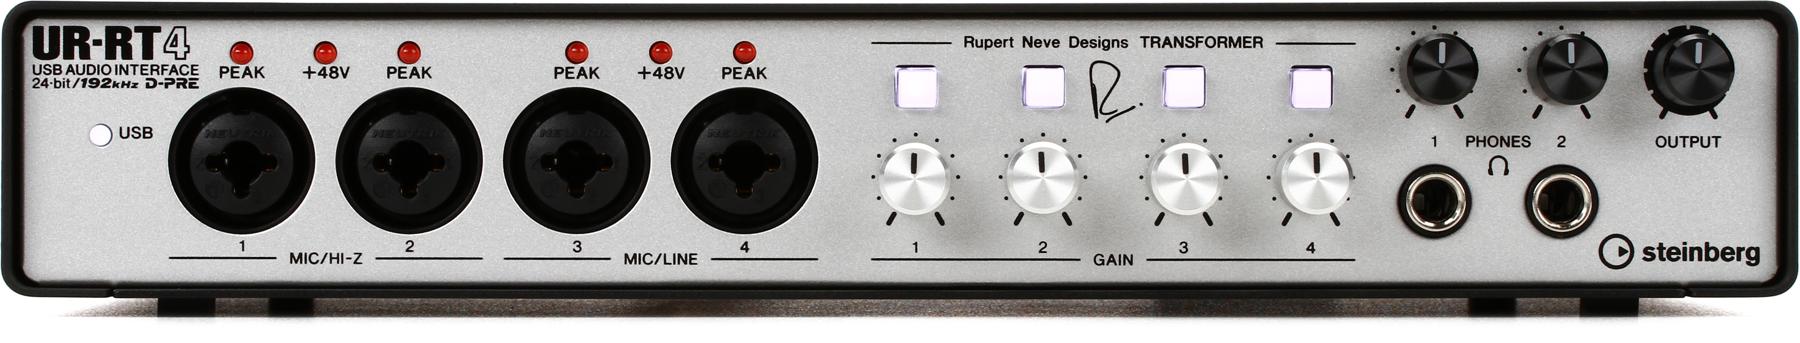 Steinberg UR-RT4 USB Audio Interface with 4 Rupert Neve Transformers main image